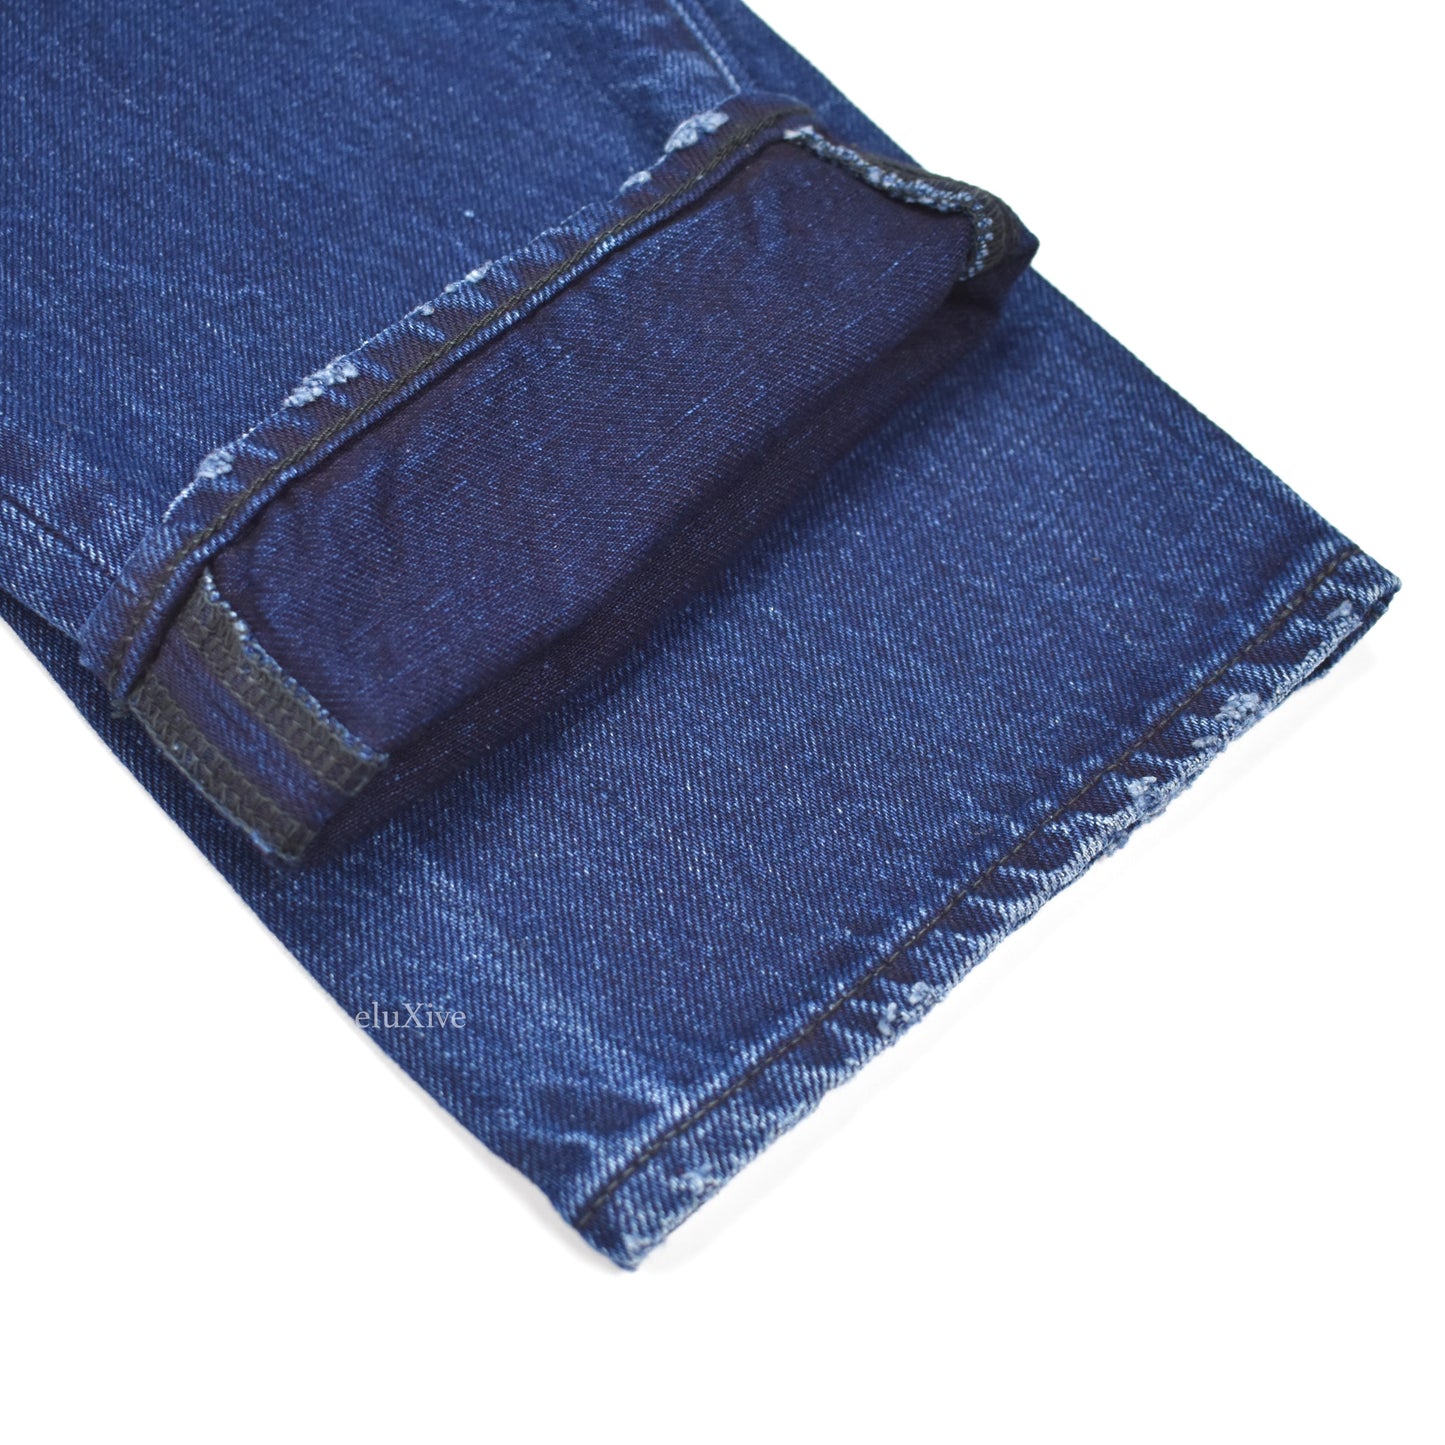 Kapital - Overdyed Blue Denim Jeans